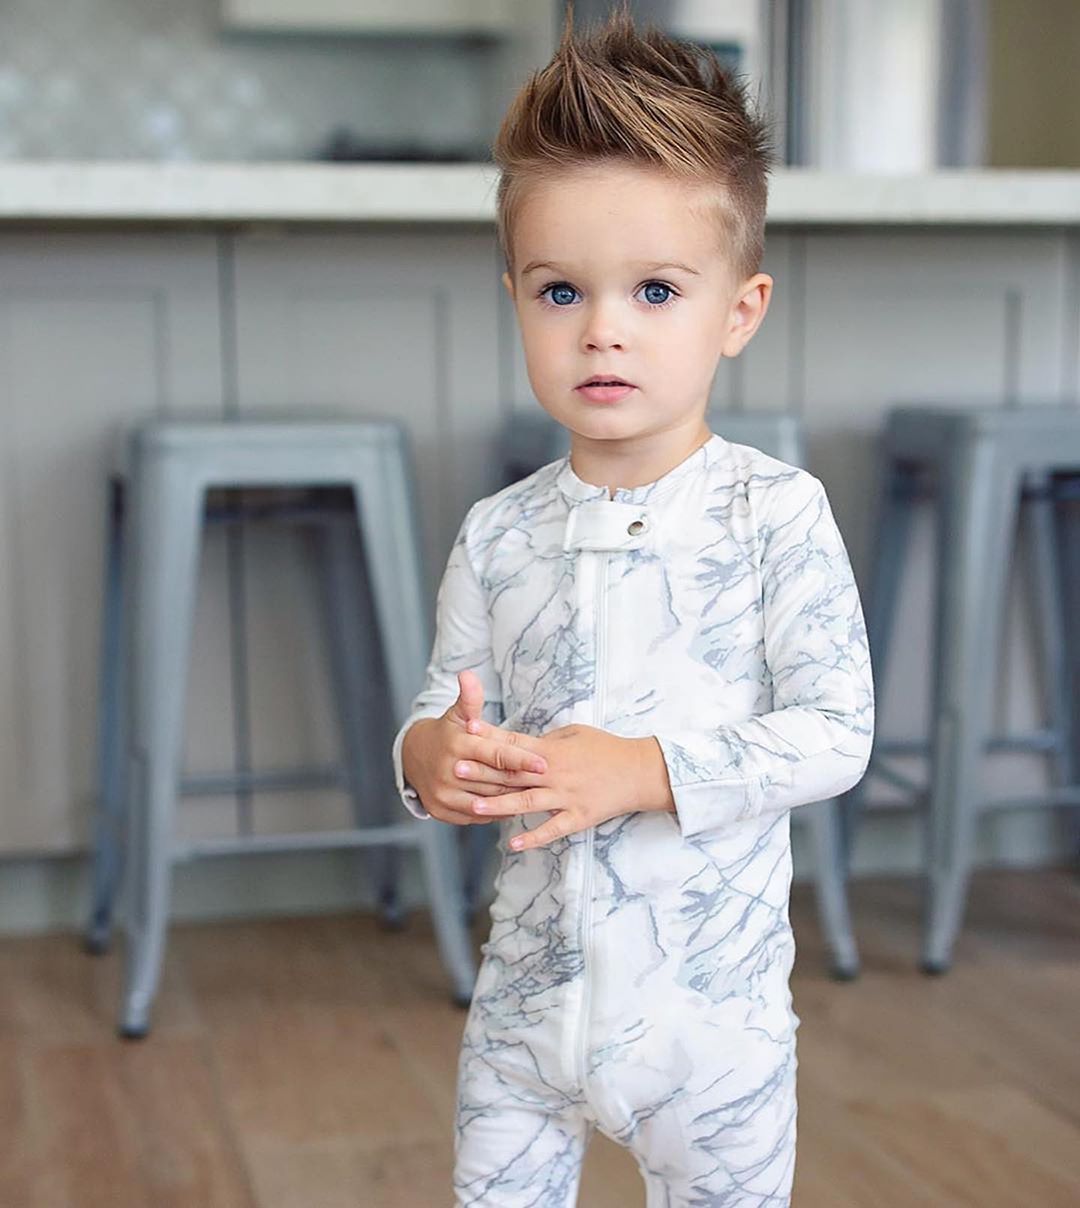 When Do Babies Stop Wearing Footie Pajamas? Baby Footie Pajama